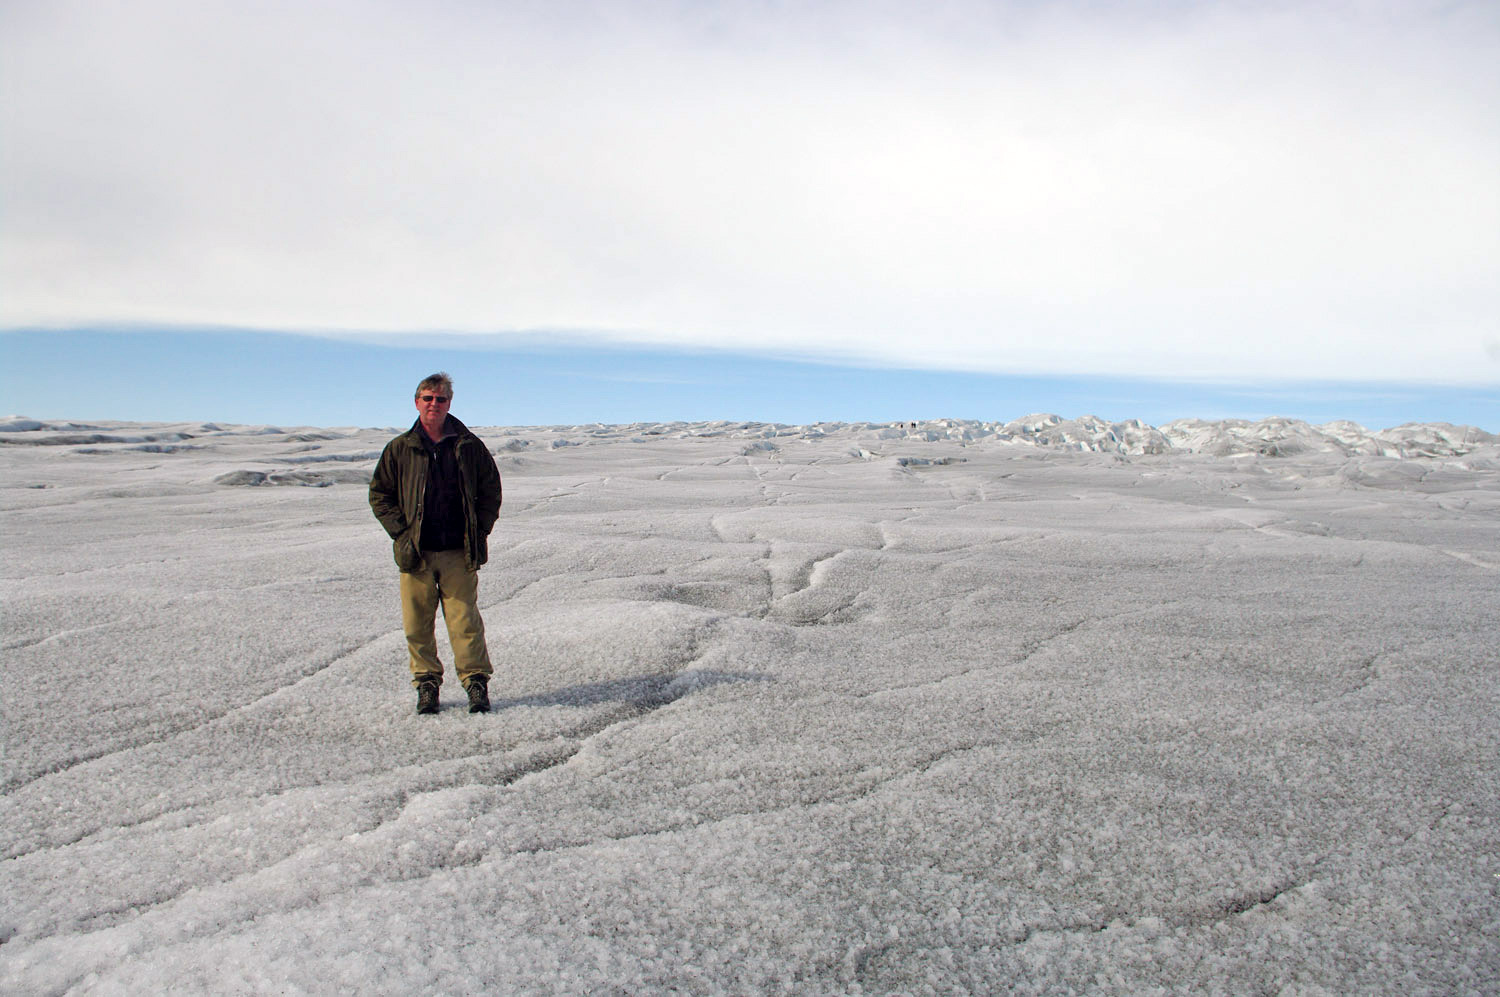 Icecap / Ice sheet 2 - East Greenland, greenland, travel